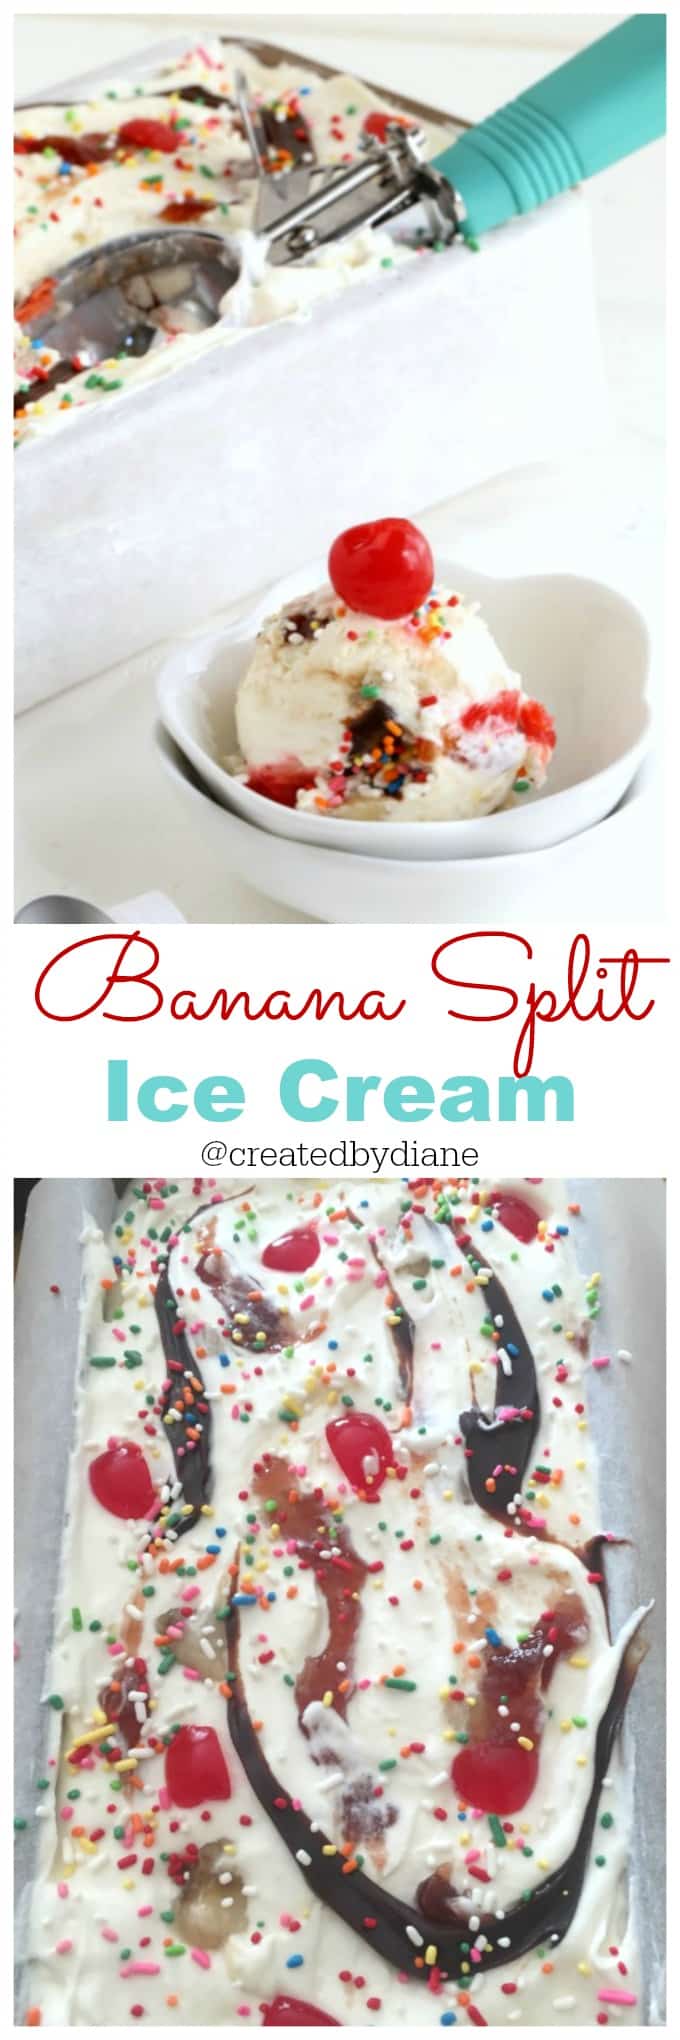 banana Split Ice Cream @createdbydiane